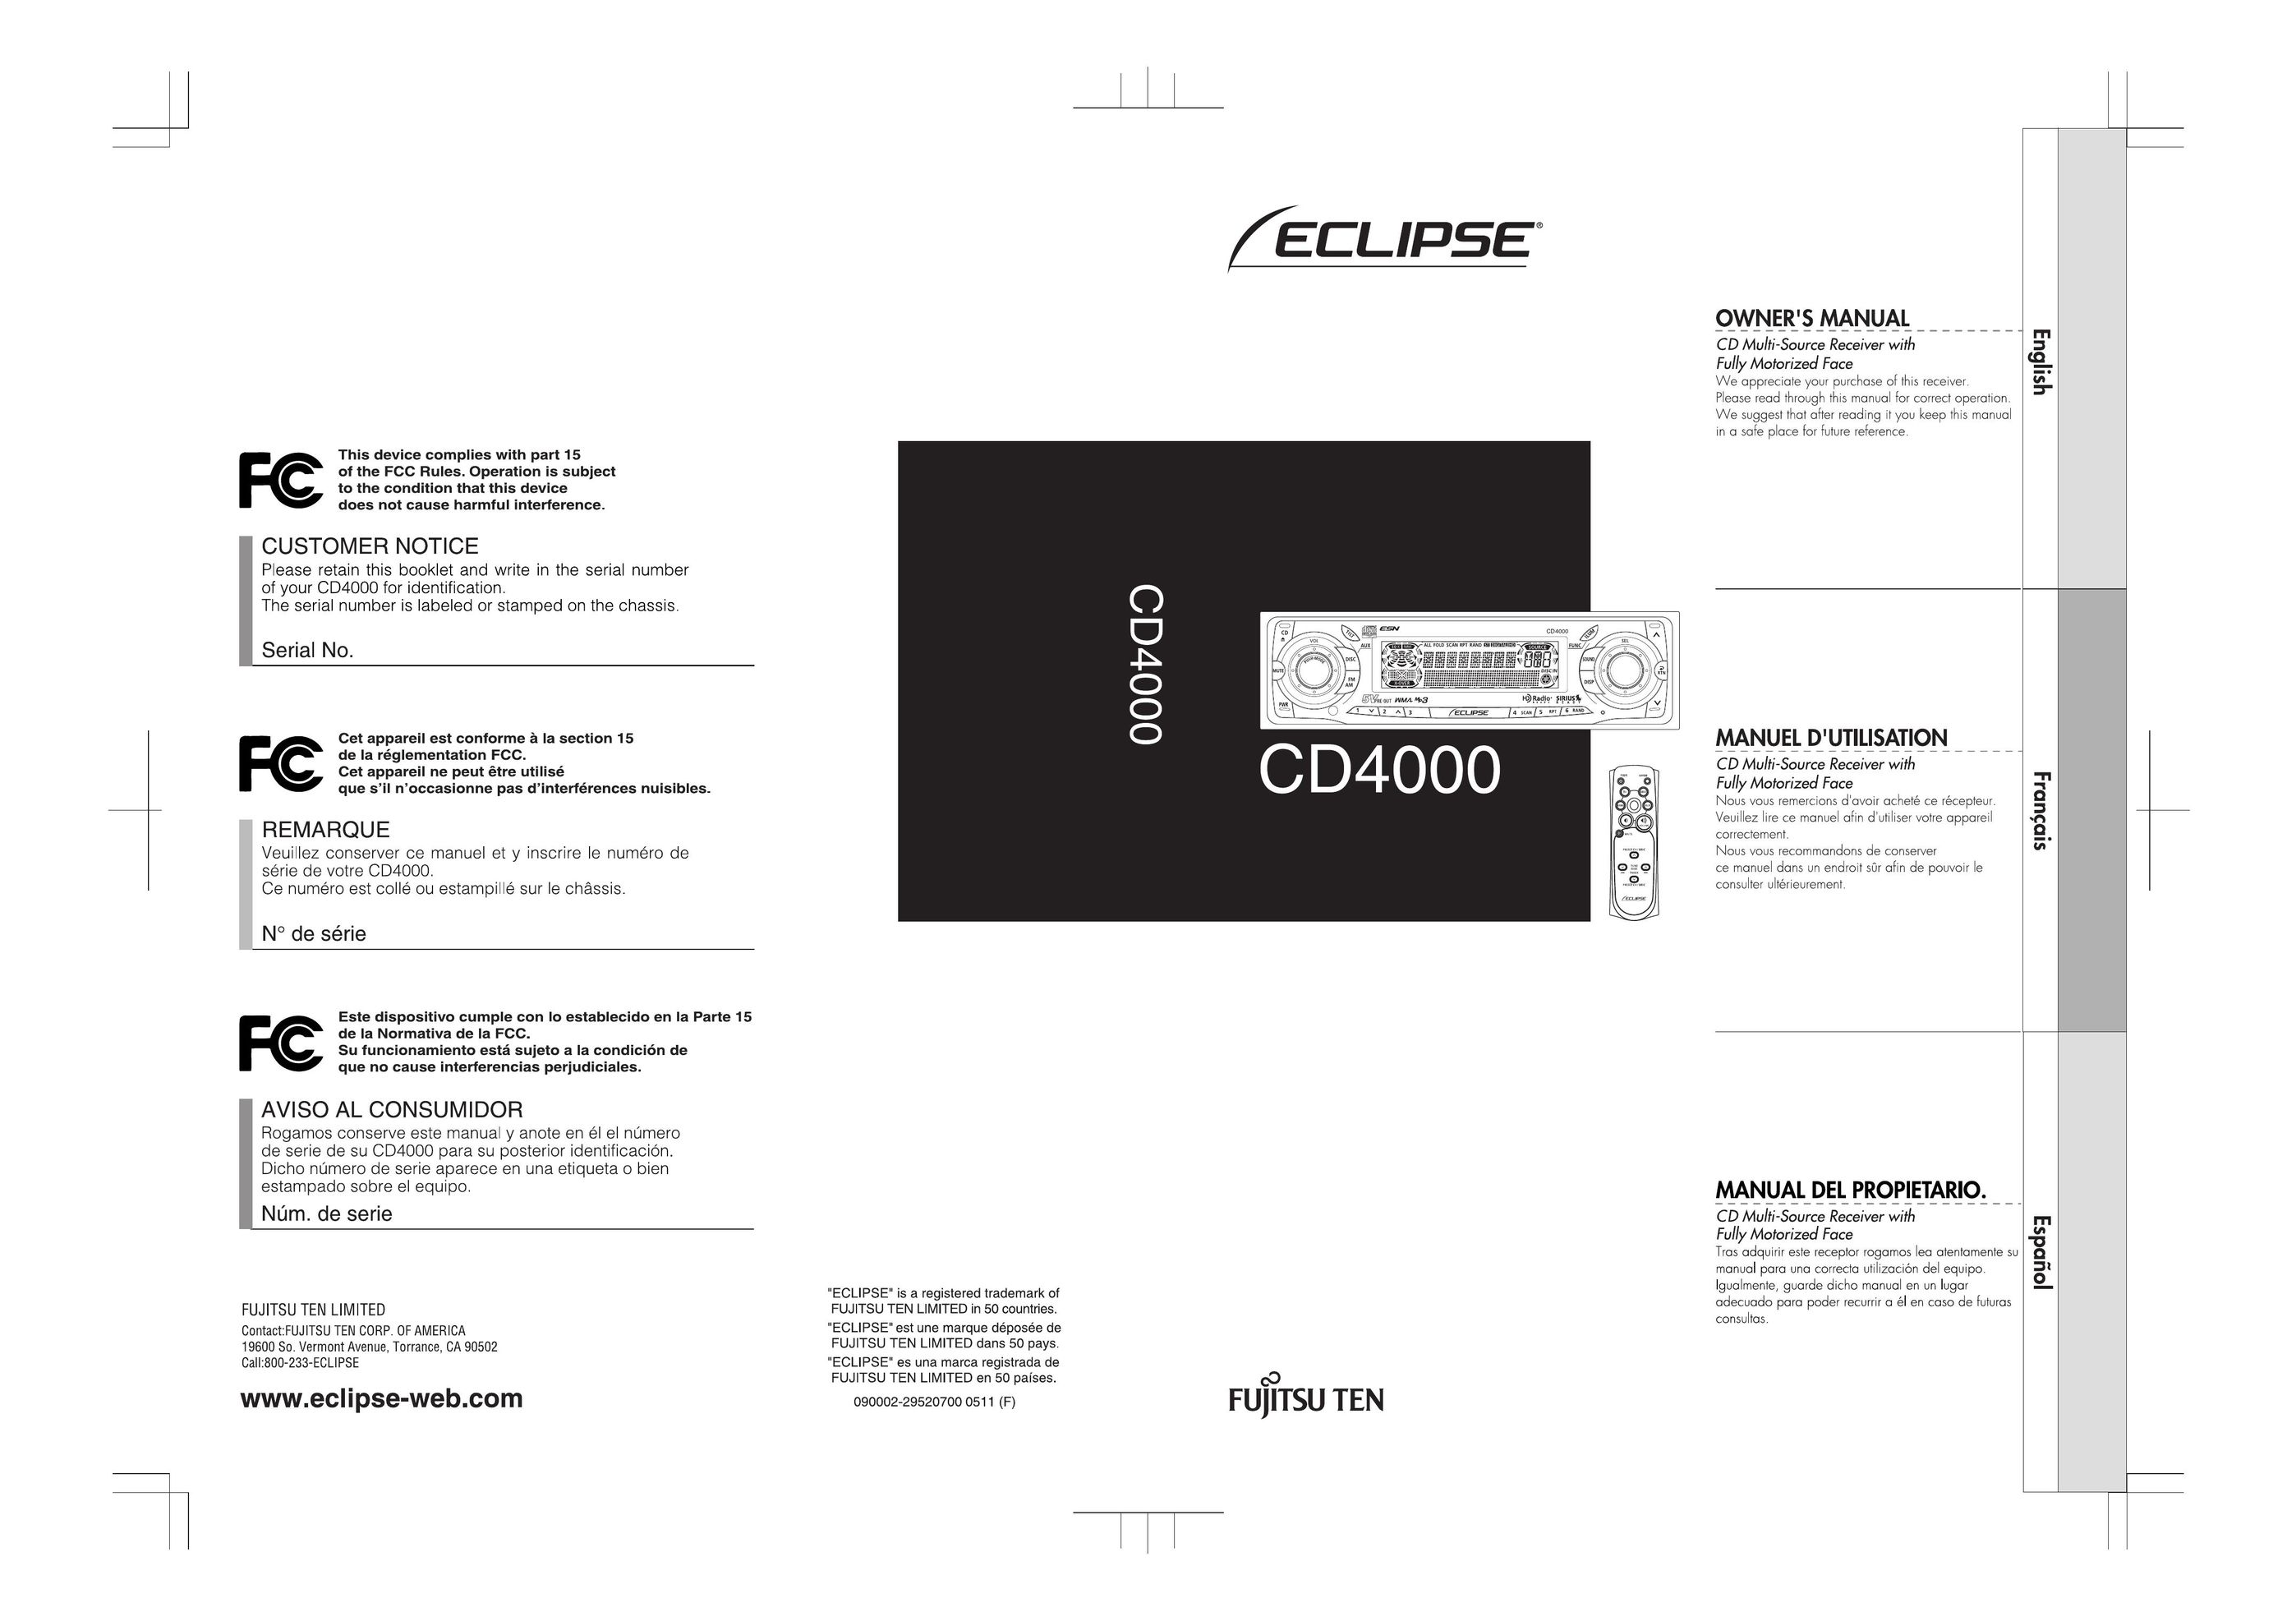 Eclipse - Fujitsu Ten CD4000 Car Stereo System User Manual